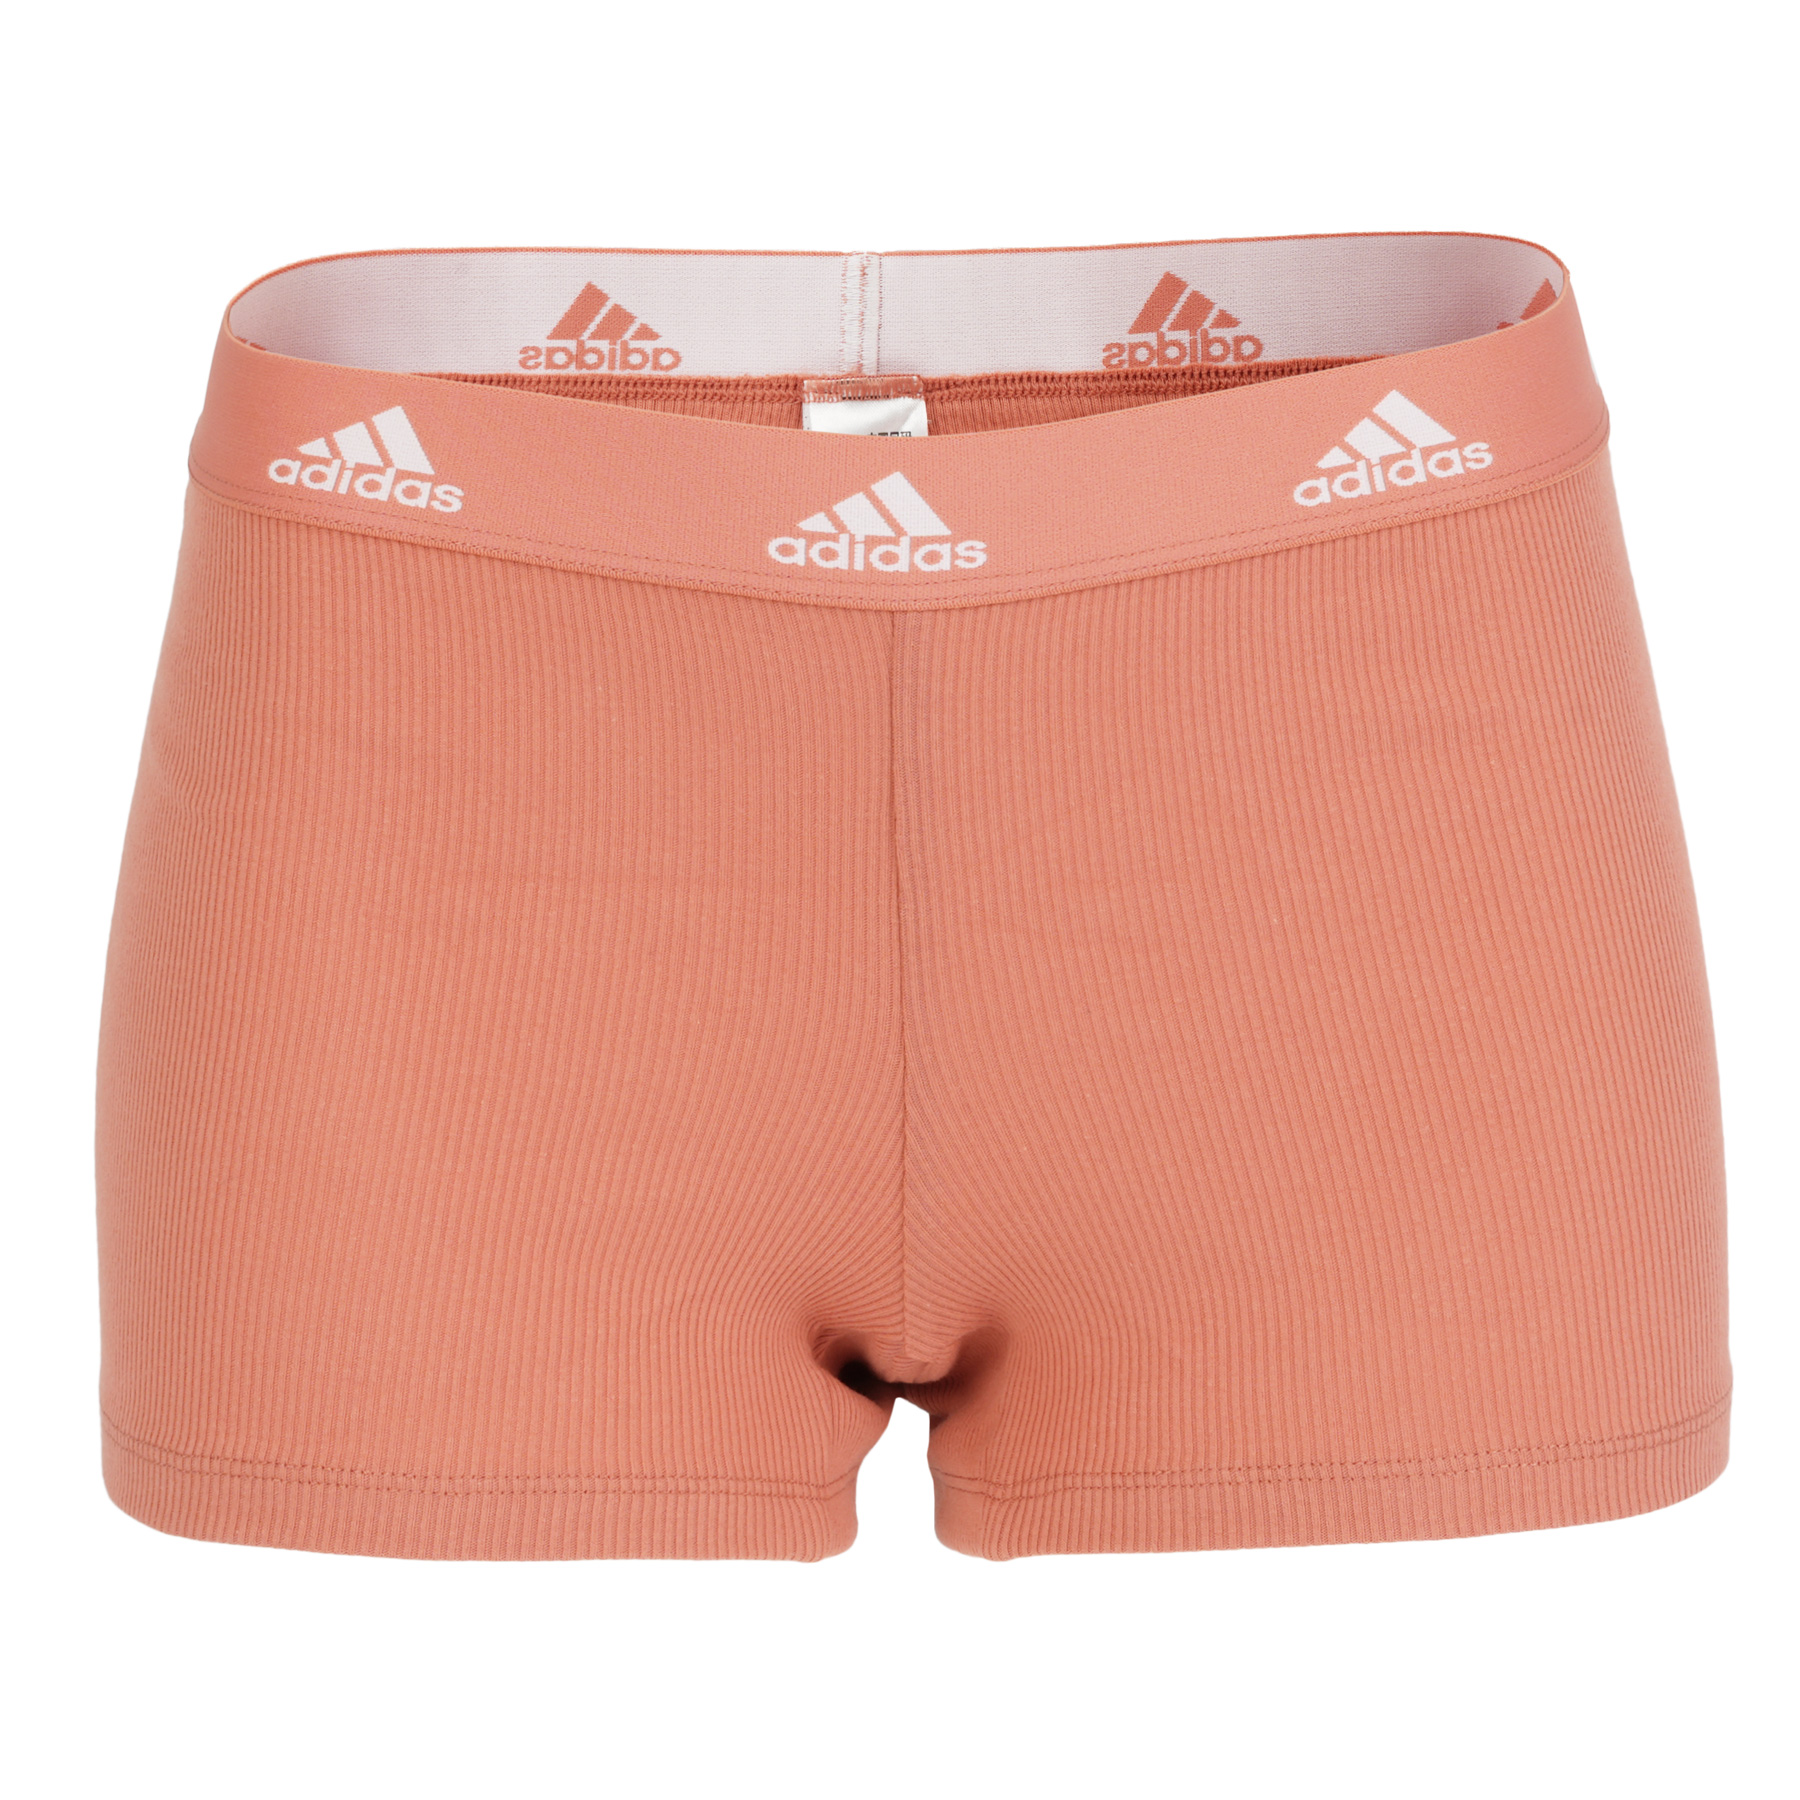 Image of adidas Sports Underwear Rib 2x2 Cotton  Boxer Shorts Women - 523 - wonder clay